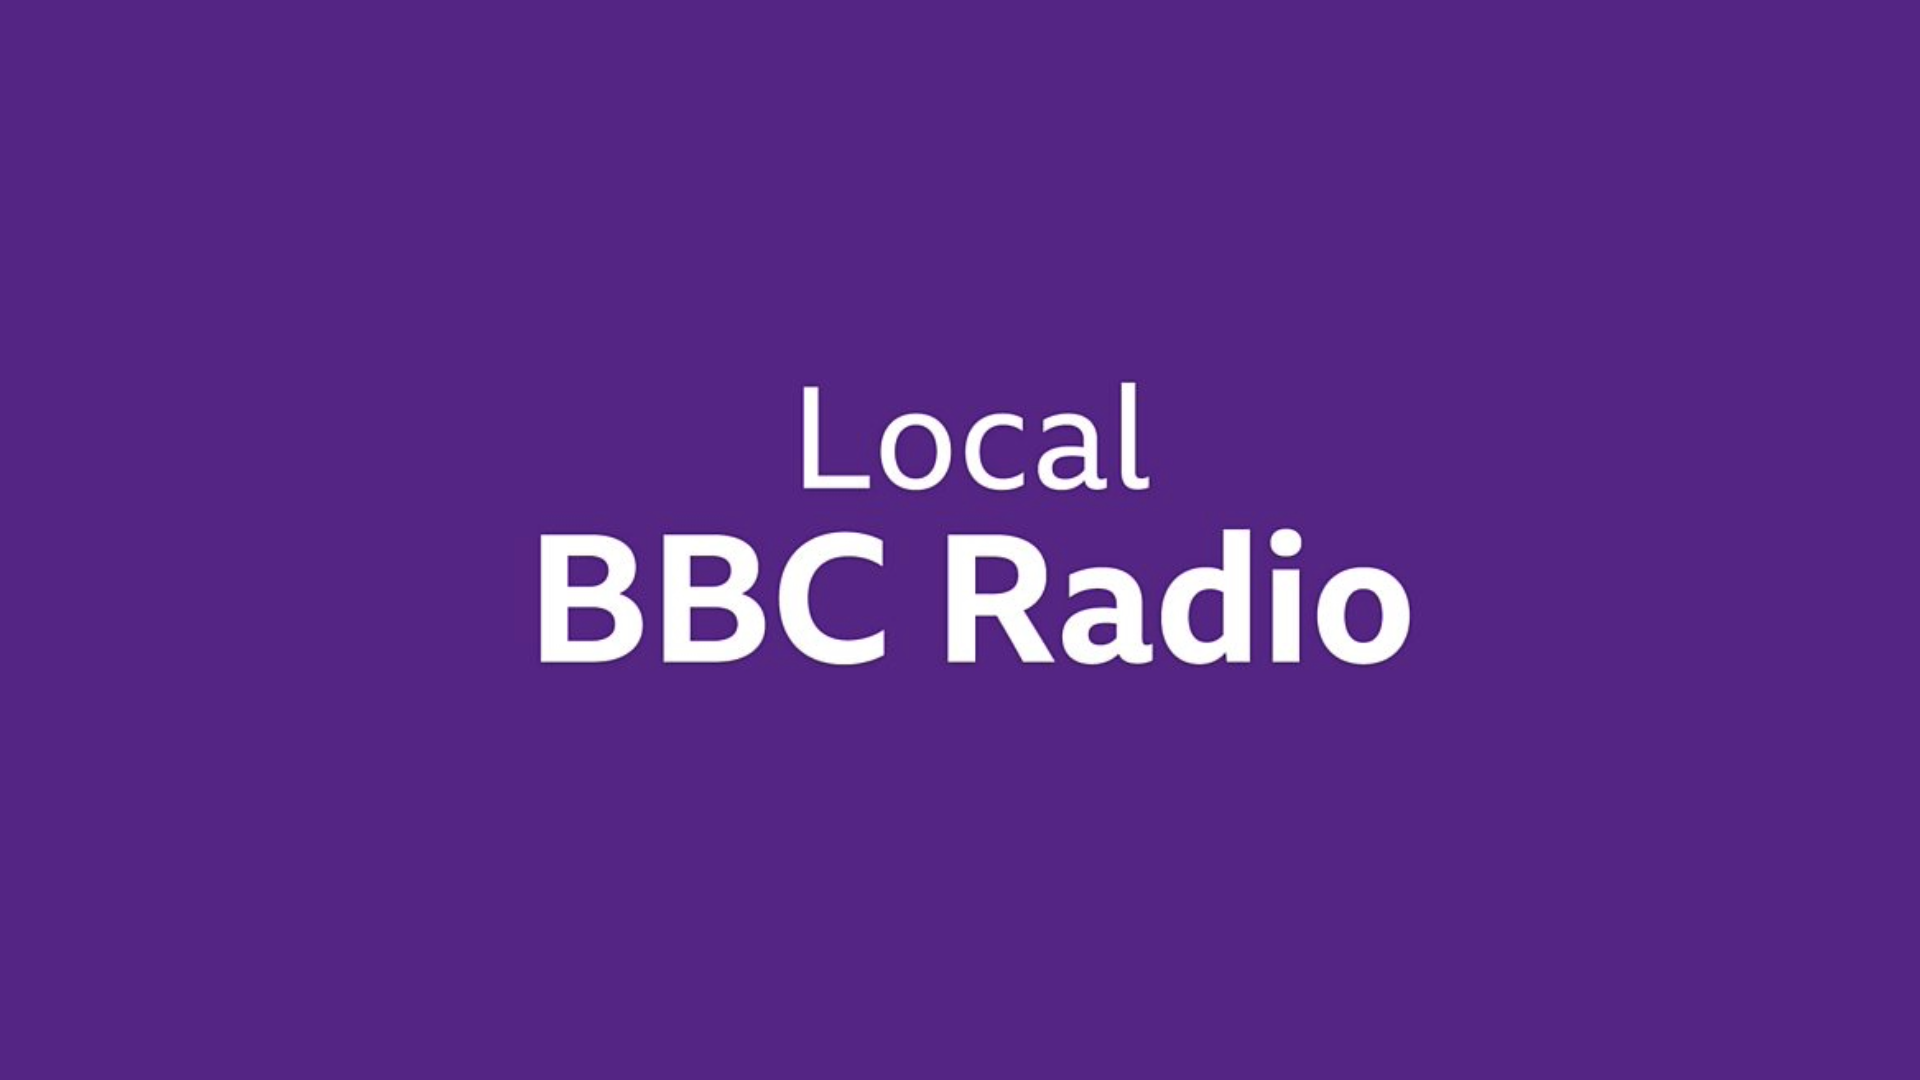 BBC local radio logo